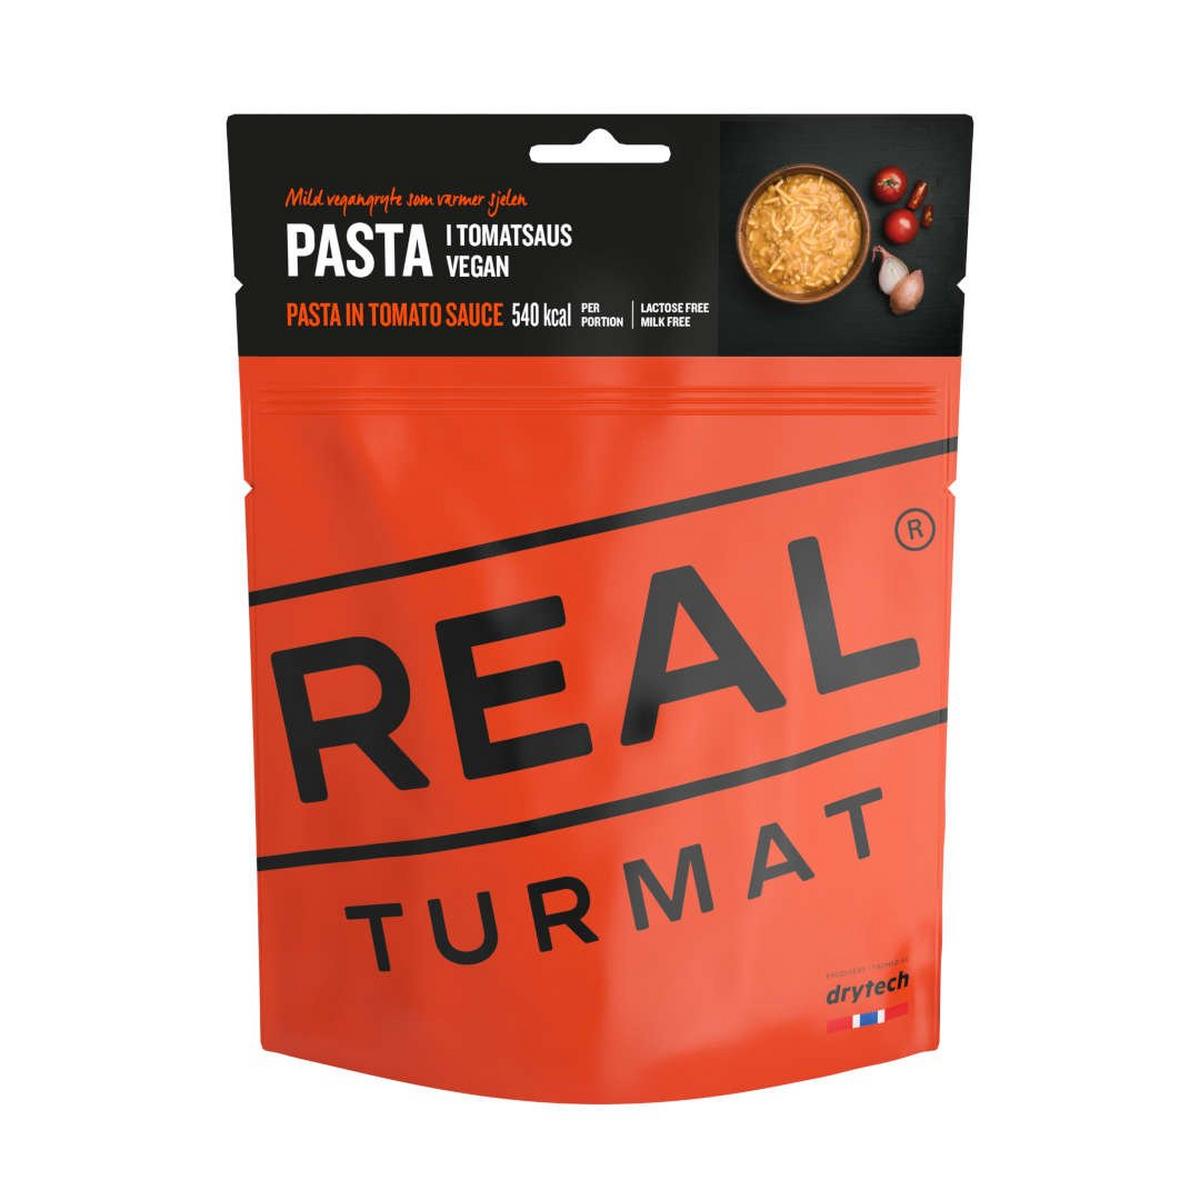 Real Turmat Pasta in Tomato Sauce